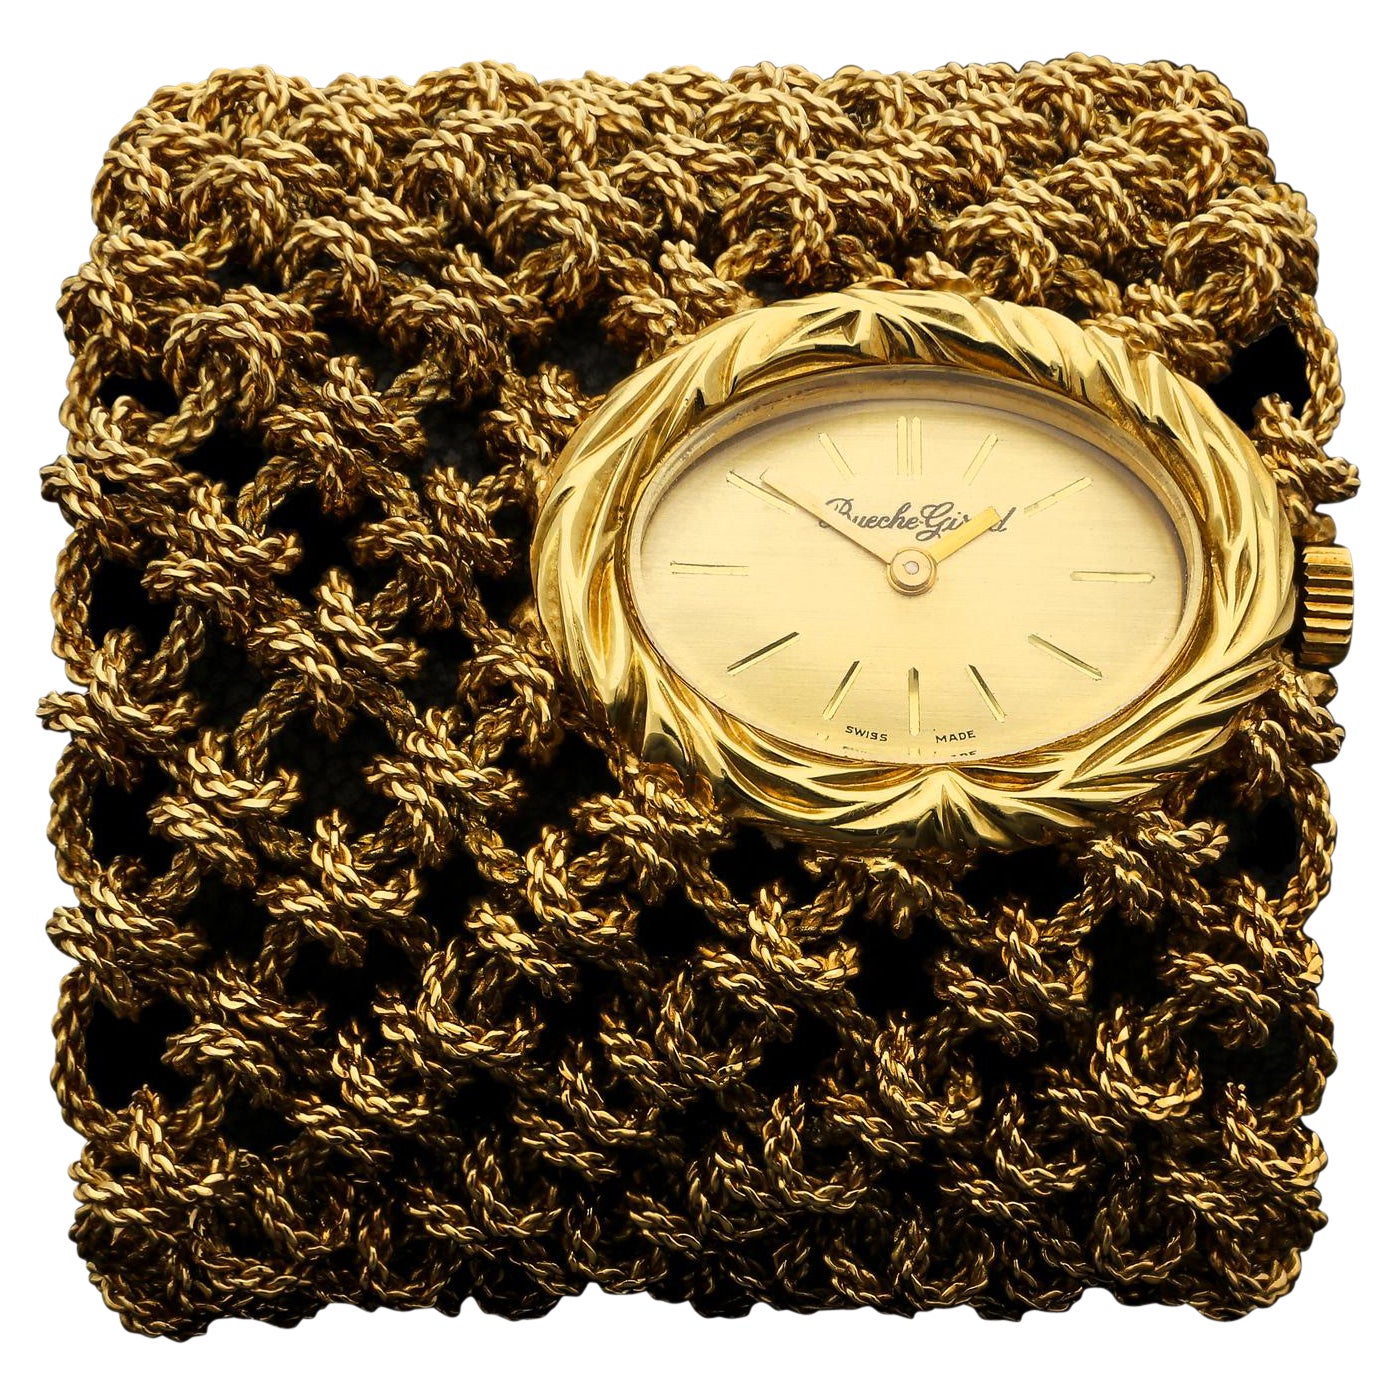 Bueche-Girod Striking Dress Watch Wide Knitted 18ct Yellow Gold Bracelet, 1970's